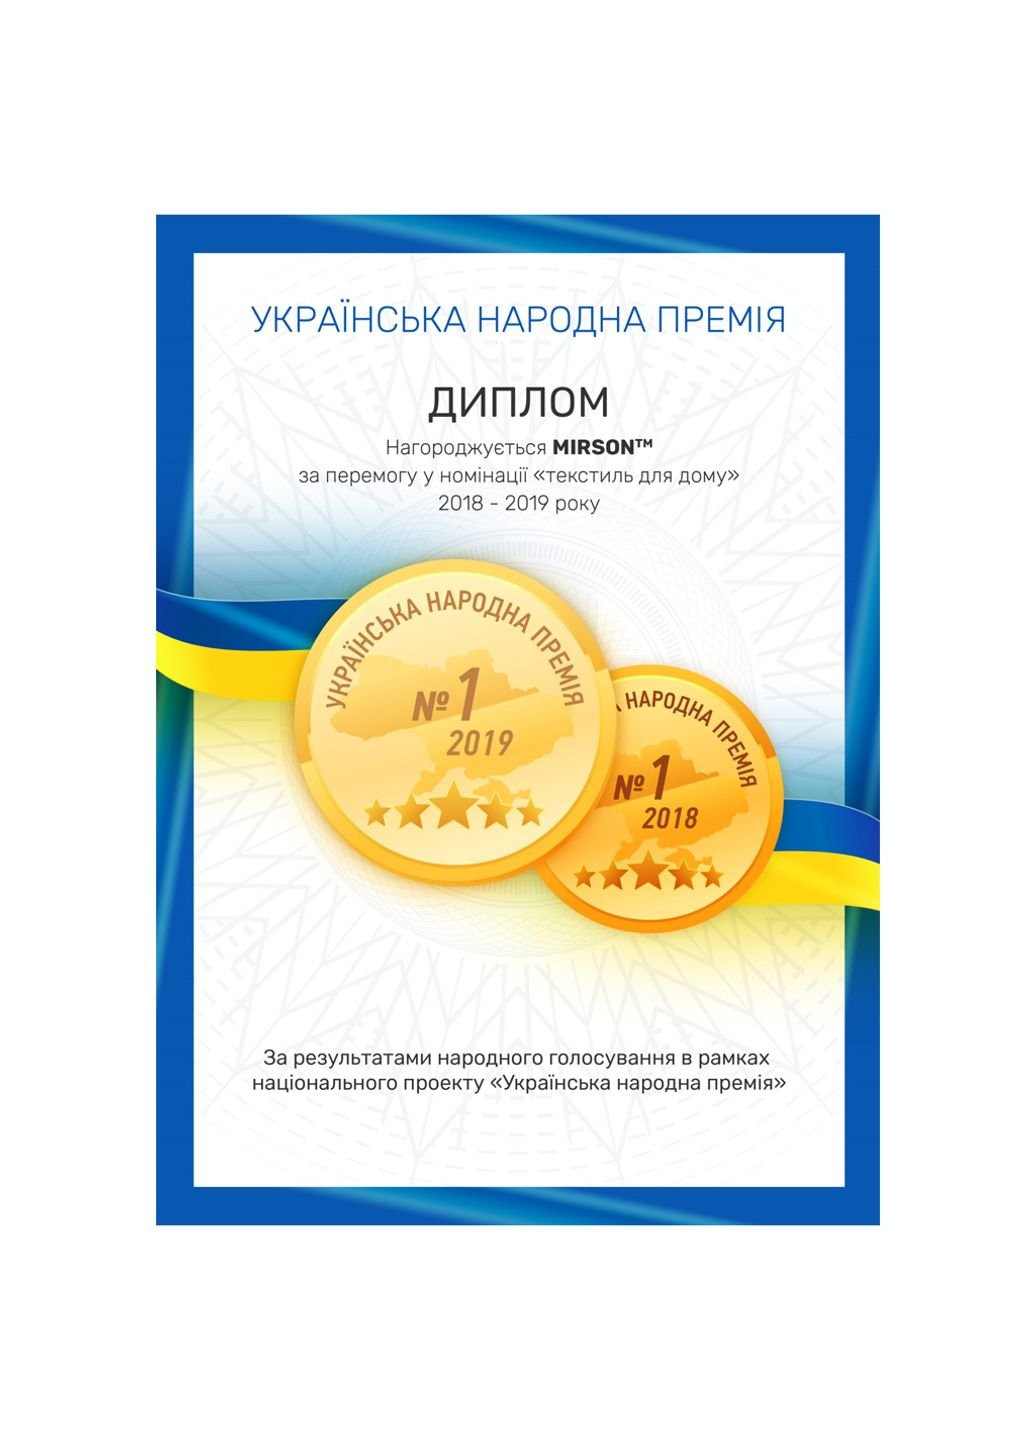 Mirson полотенце набор банный №5011 softness plum 50x90, 70x140, 100x150 (2200003182712) малиновый производство - Украина